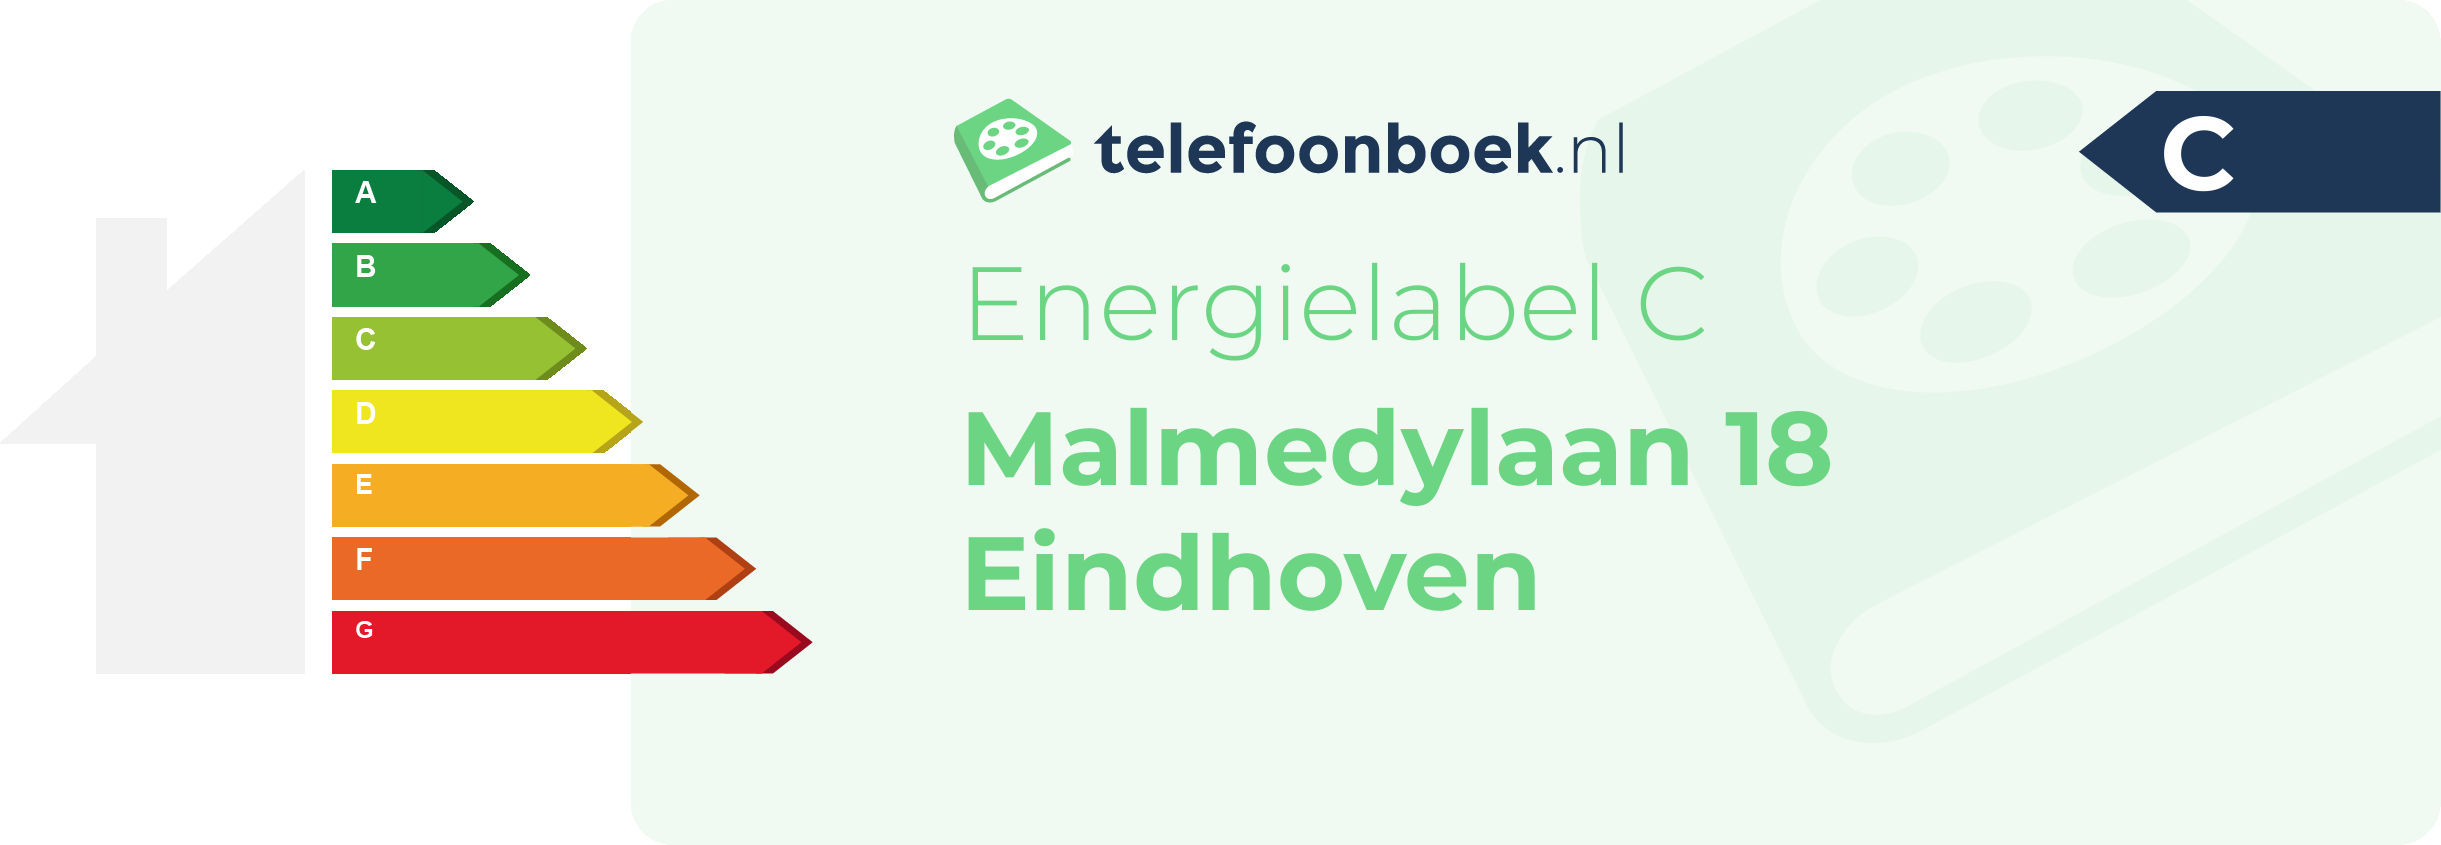 Energielabel Malmedylaan 18 Eindhoven